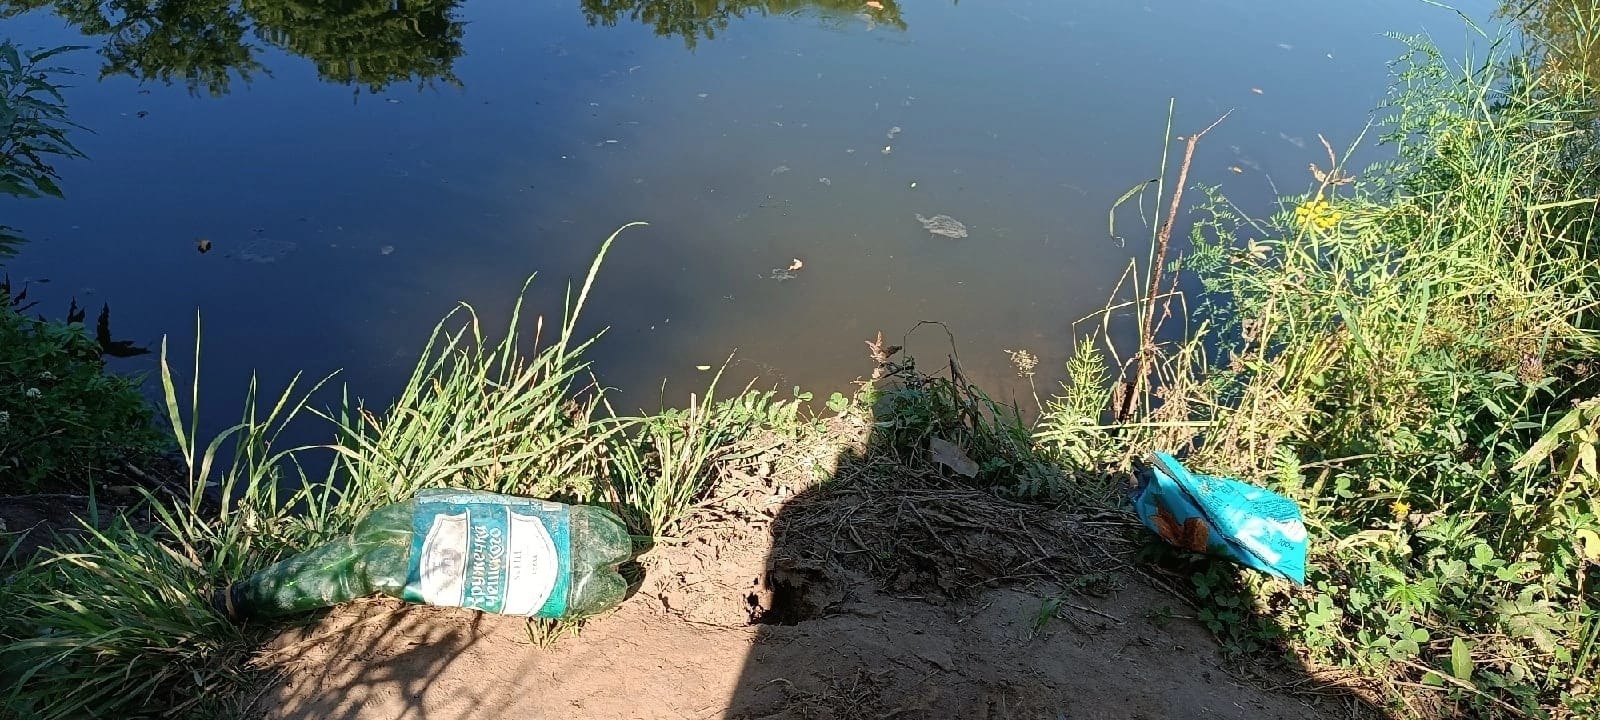 Жители Башкирии и Пермского края очистят берега реки Быстрый Танып